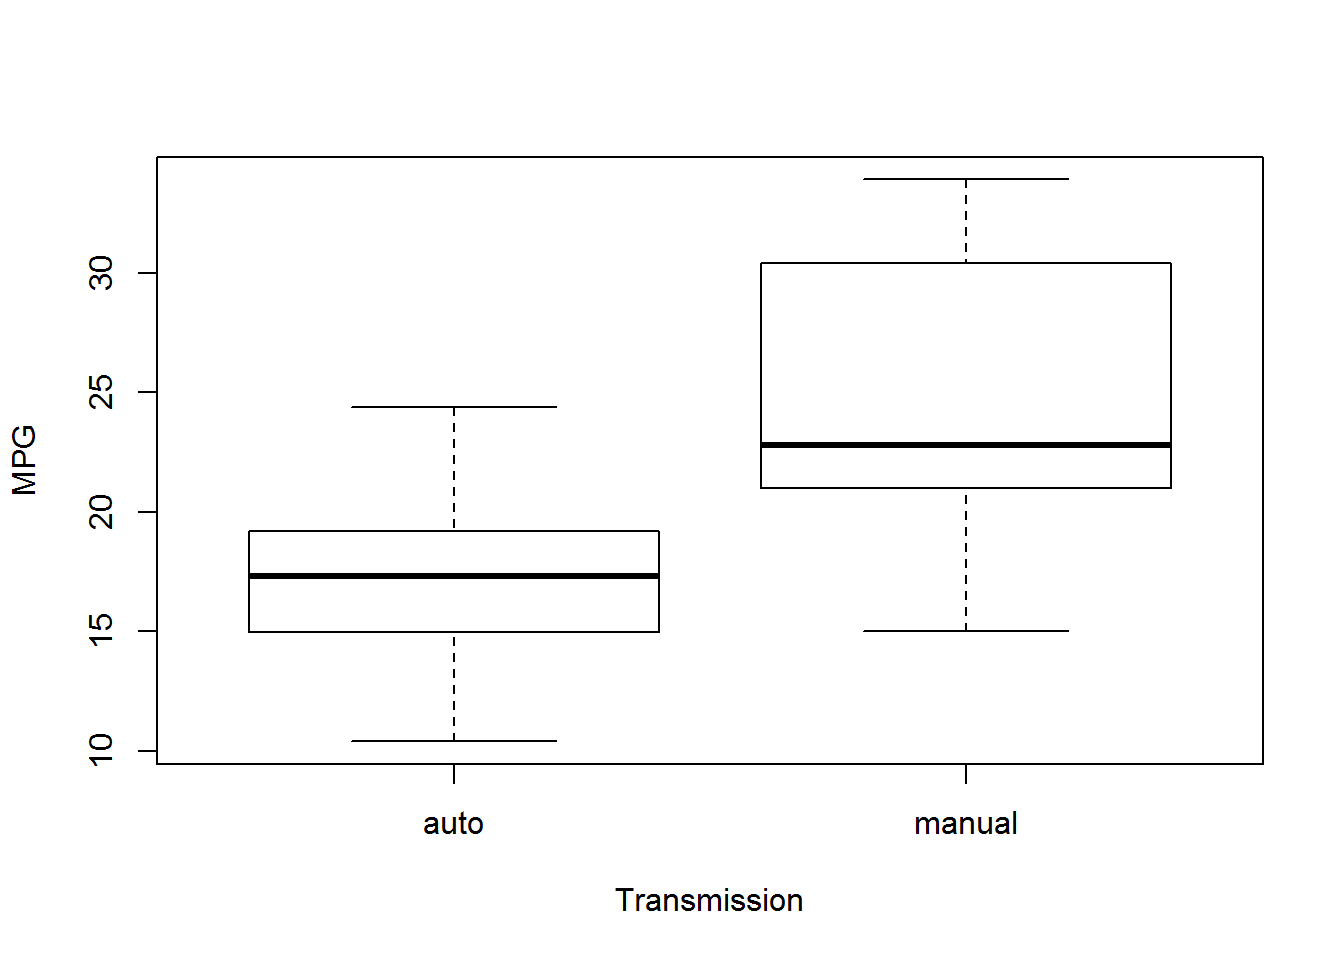 MPG vs Transmission